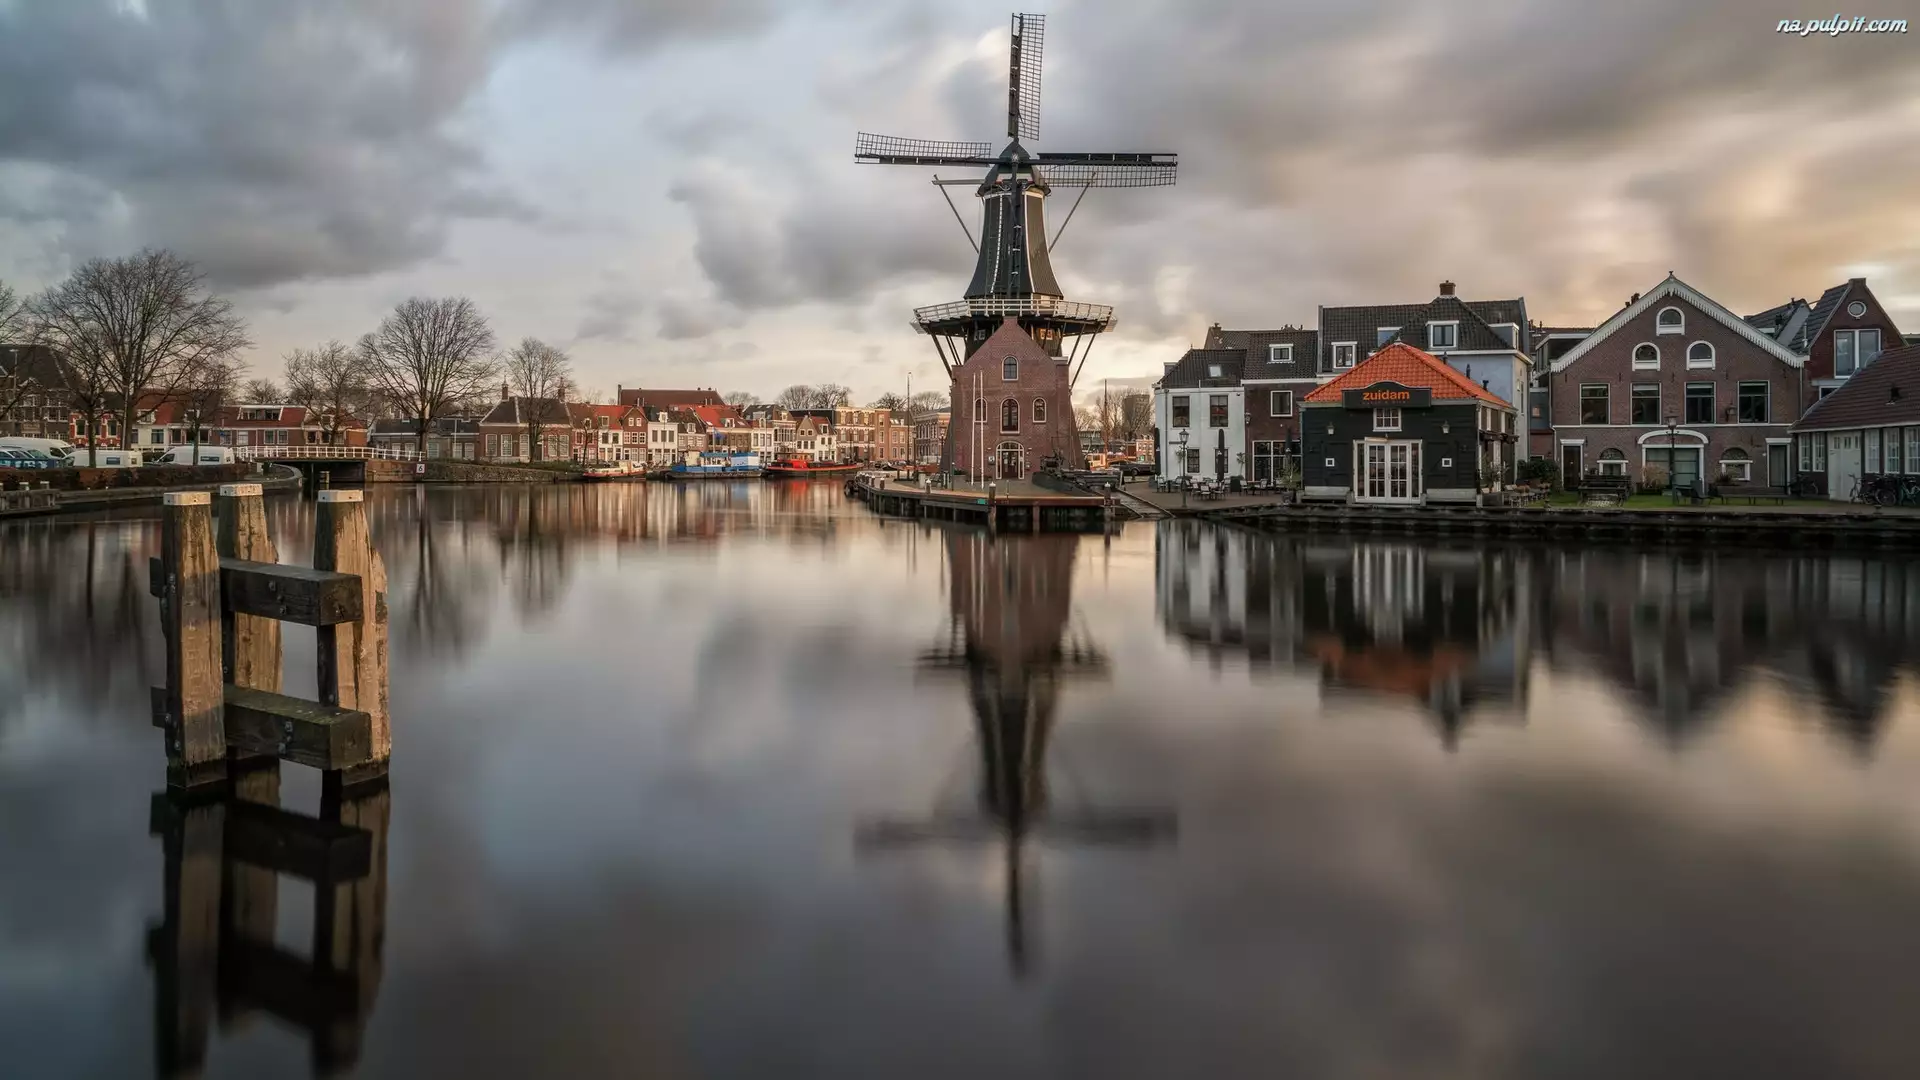 Miasto Haarlem, Domy, Rzeka Spaarne, Wiatrak De Adriaan, Holandia